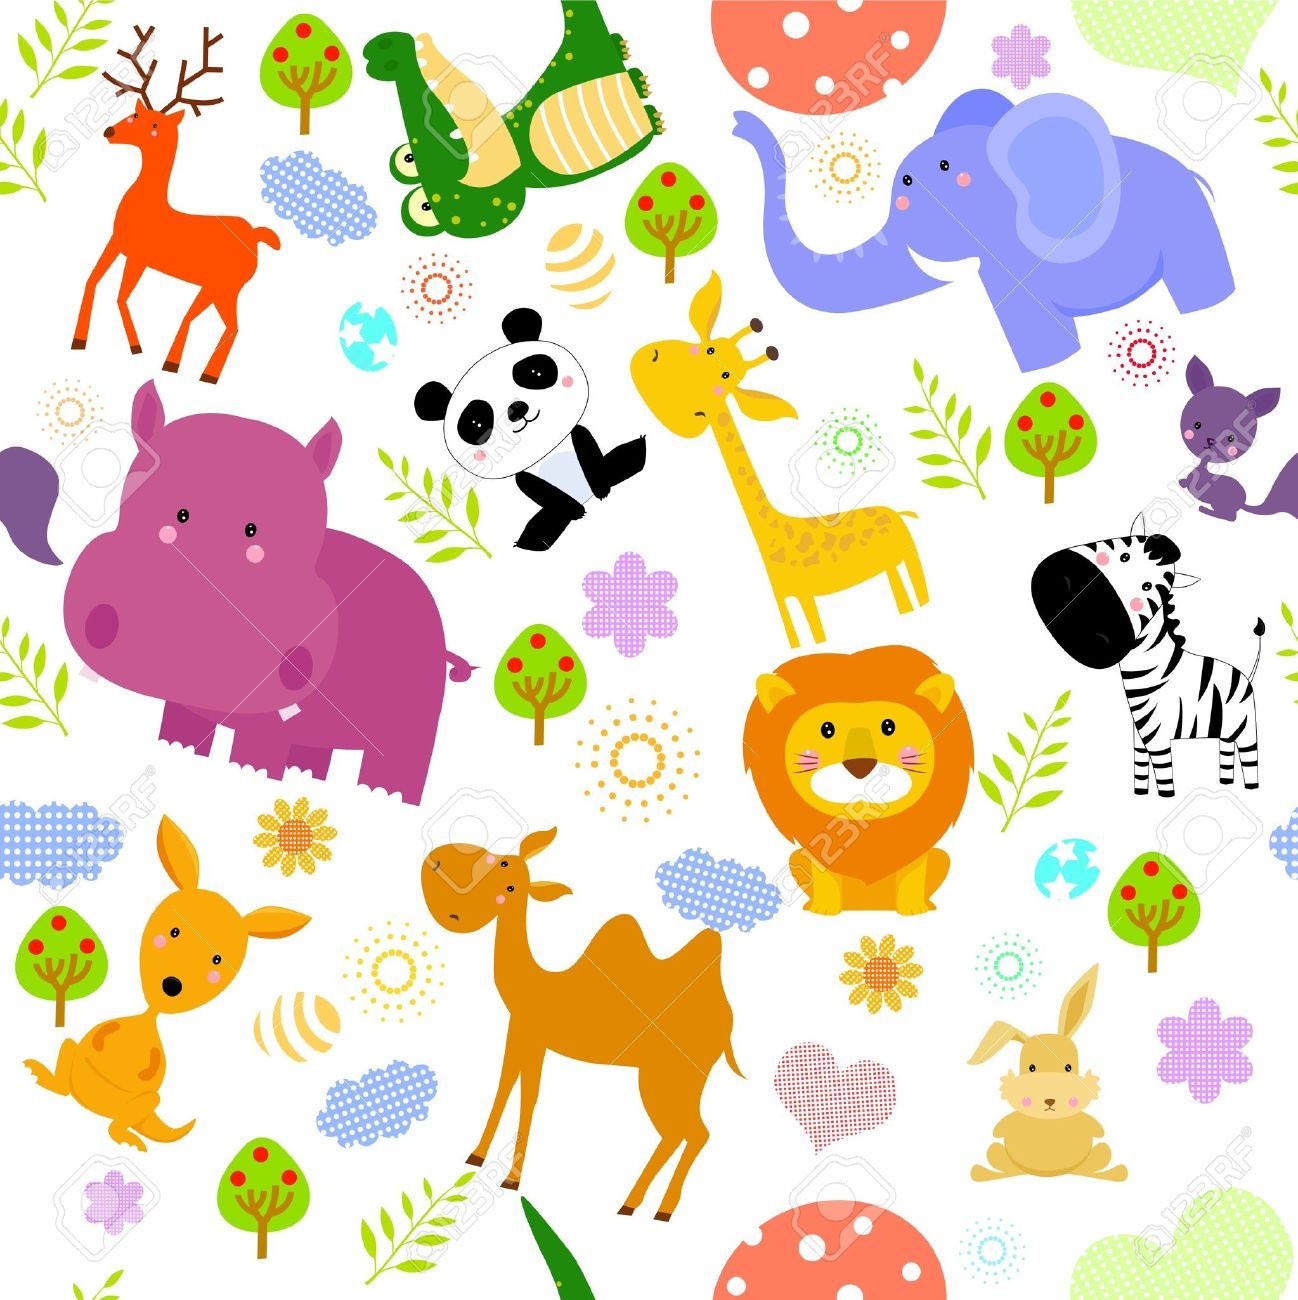 3D cute animals wallpaper Wallpapers  HD Wallpapers 690